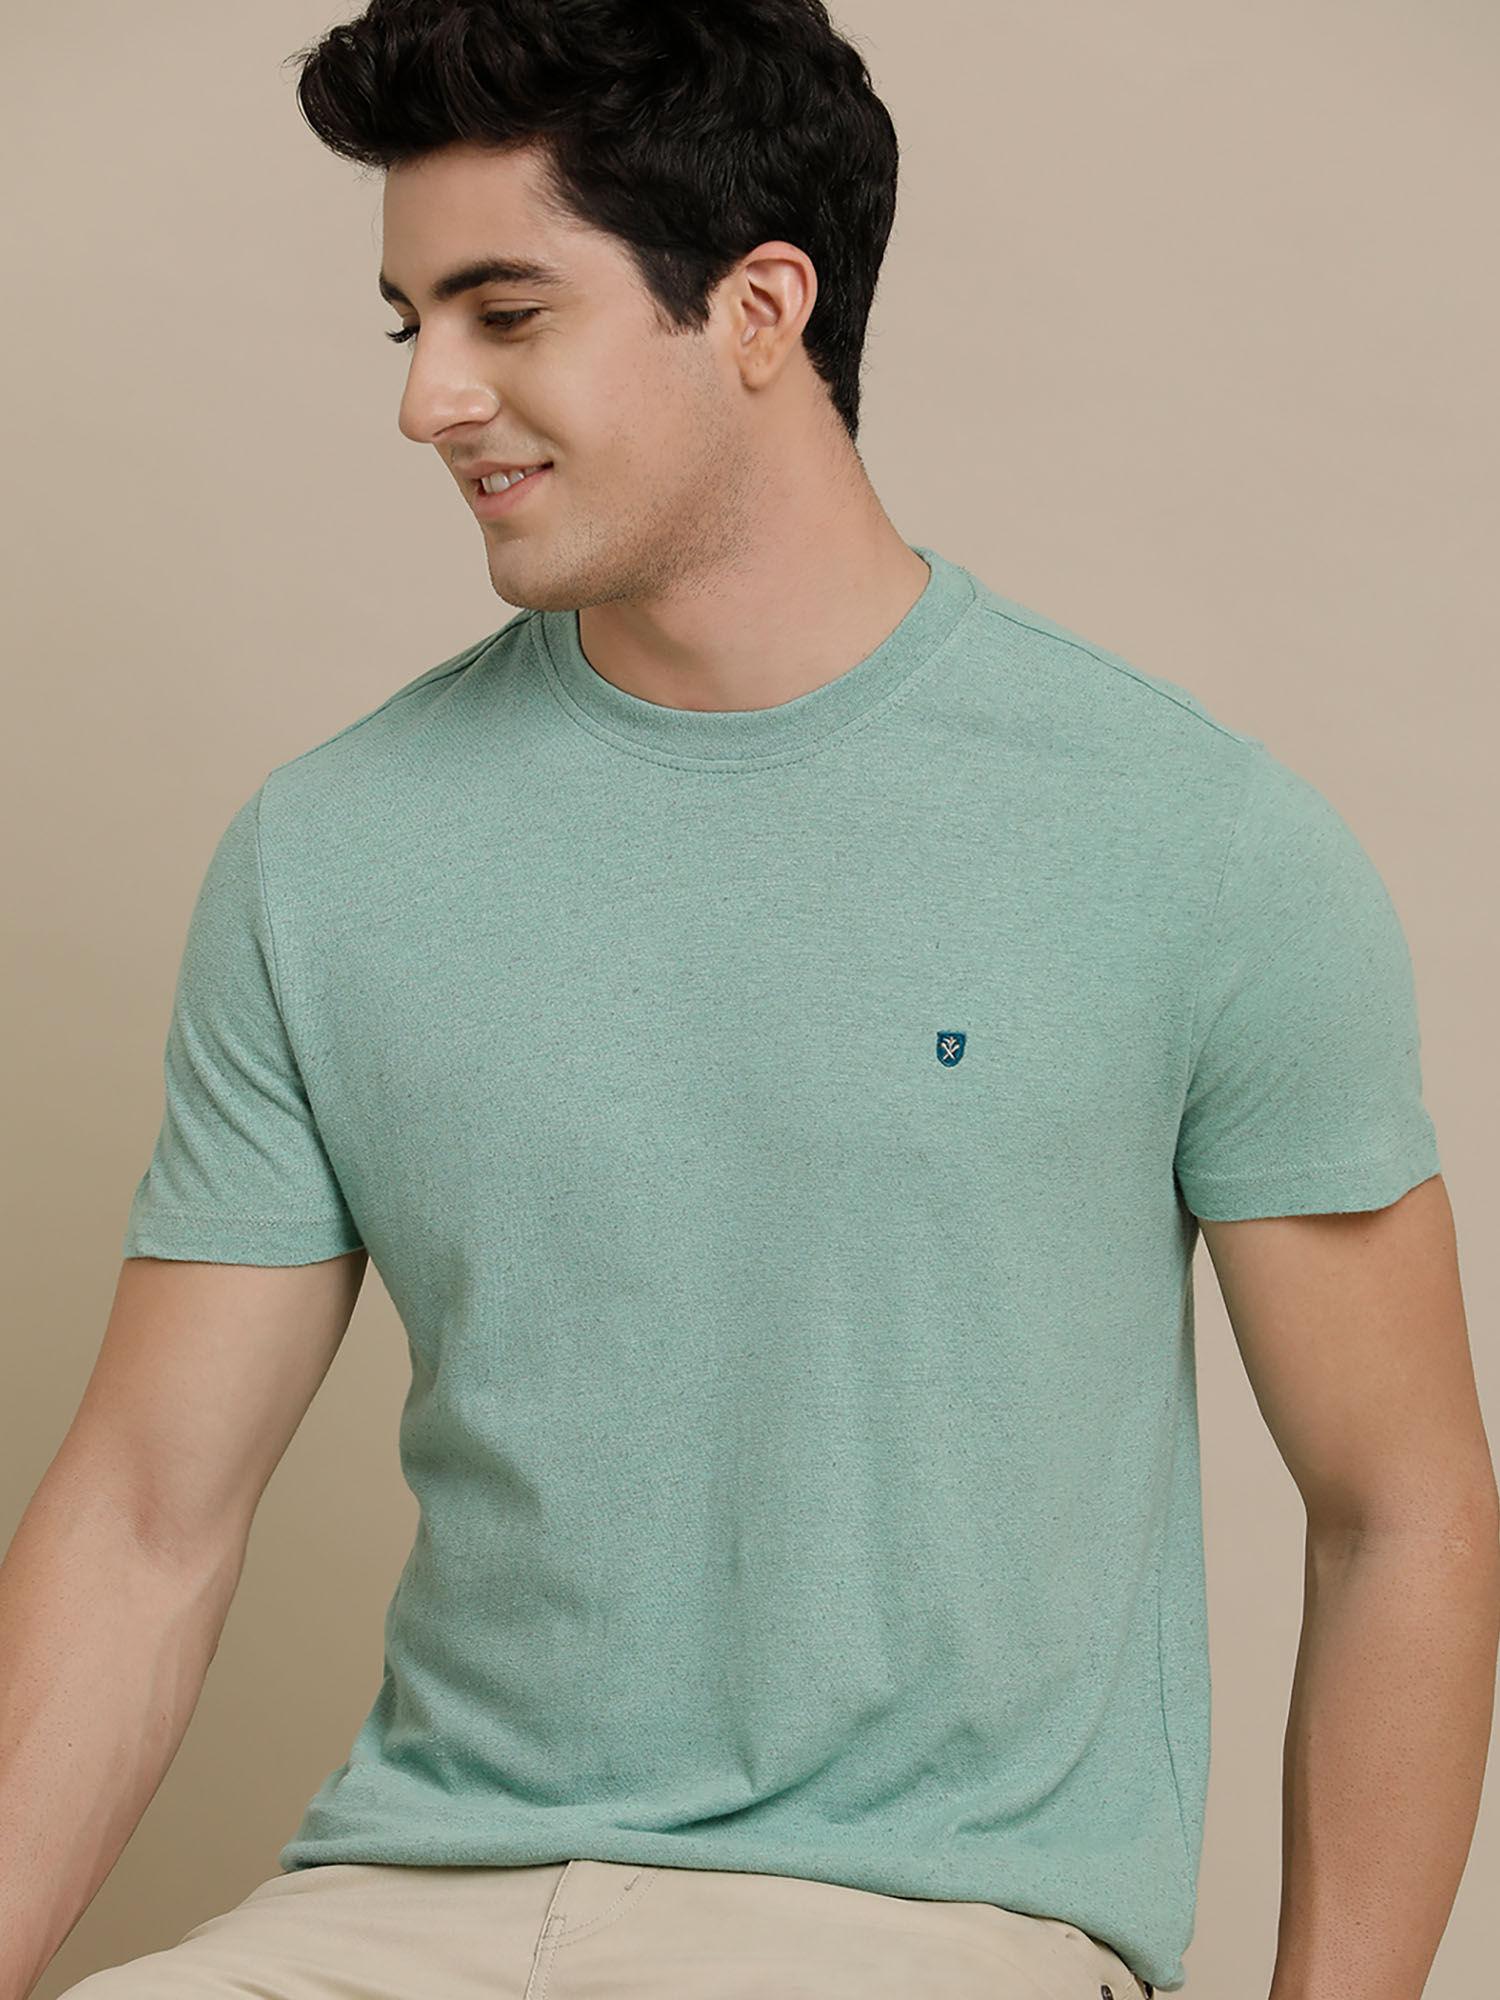 circular knit crew neck green solid half sleeve t-shirt for men